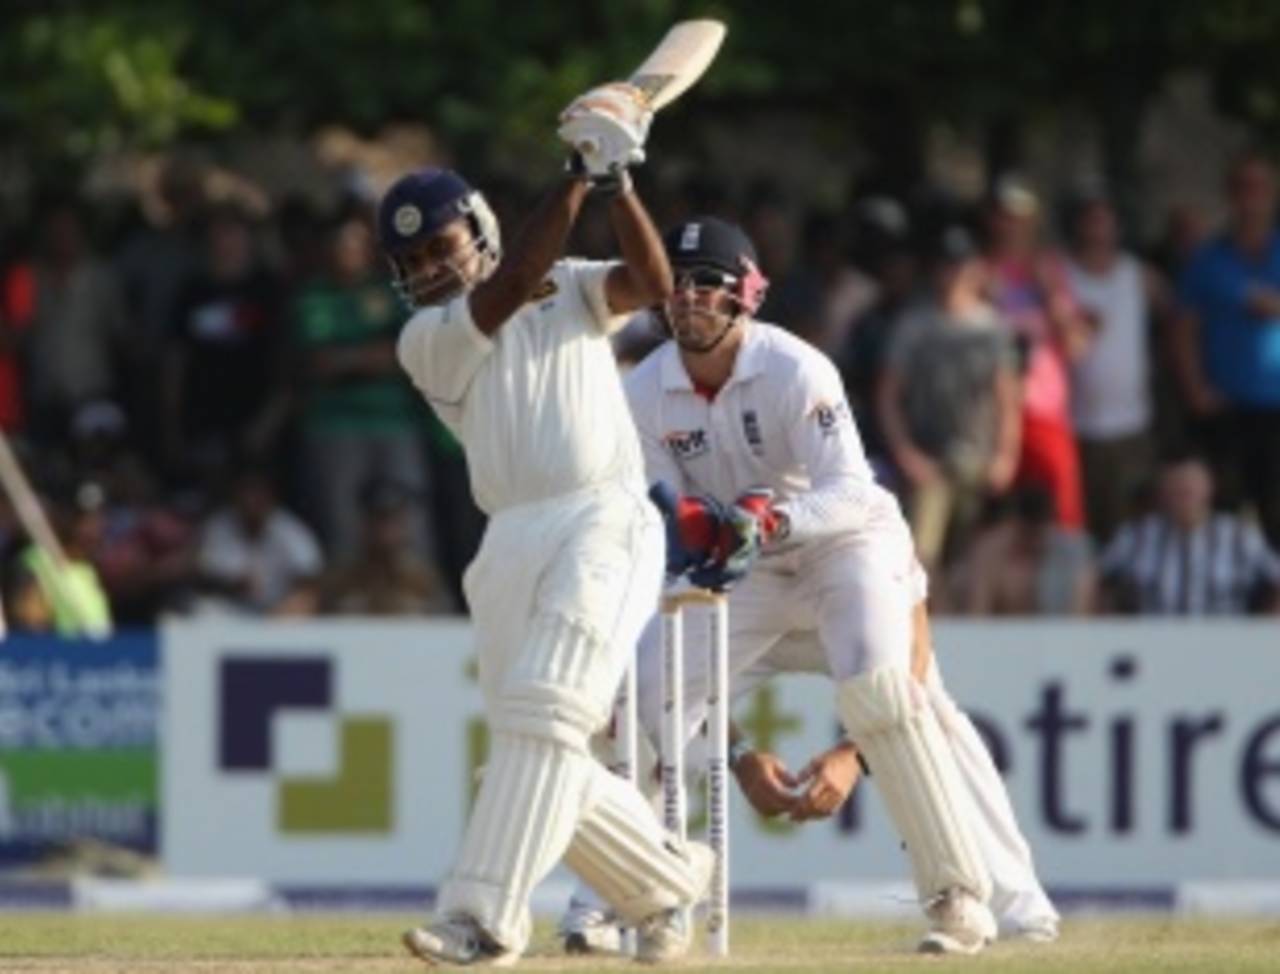 Mahela Jayawardene ended the first day on 168, Sri Lanka v England, 1st Test, Galle, 1st day, March 26, 2012